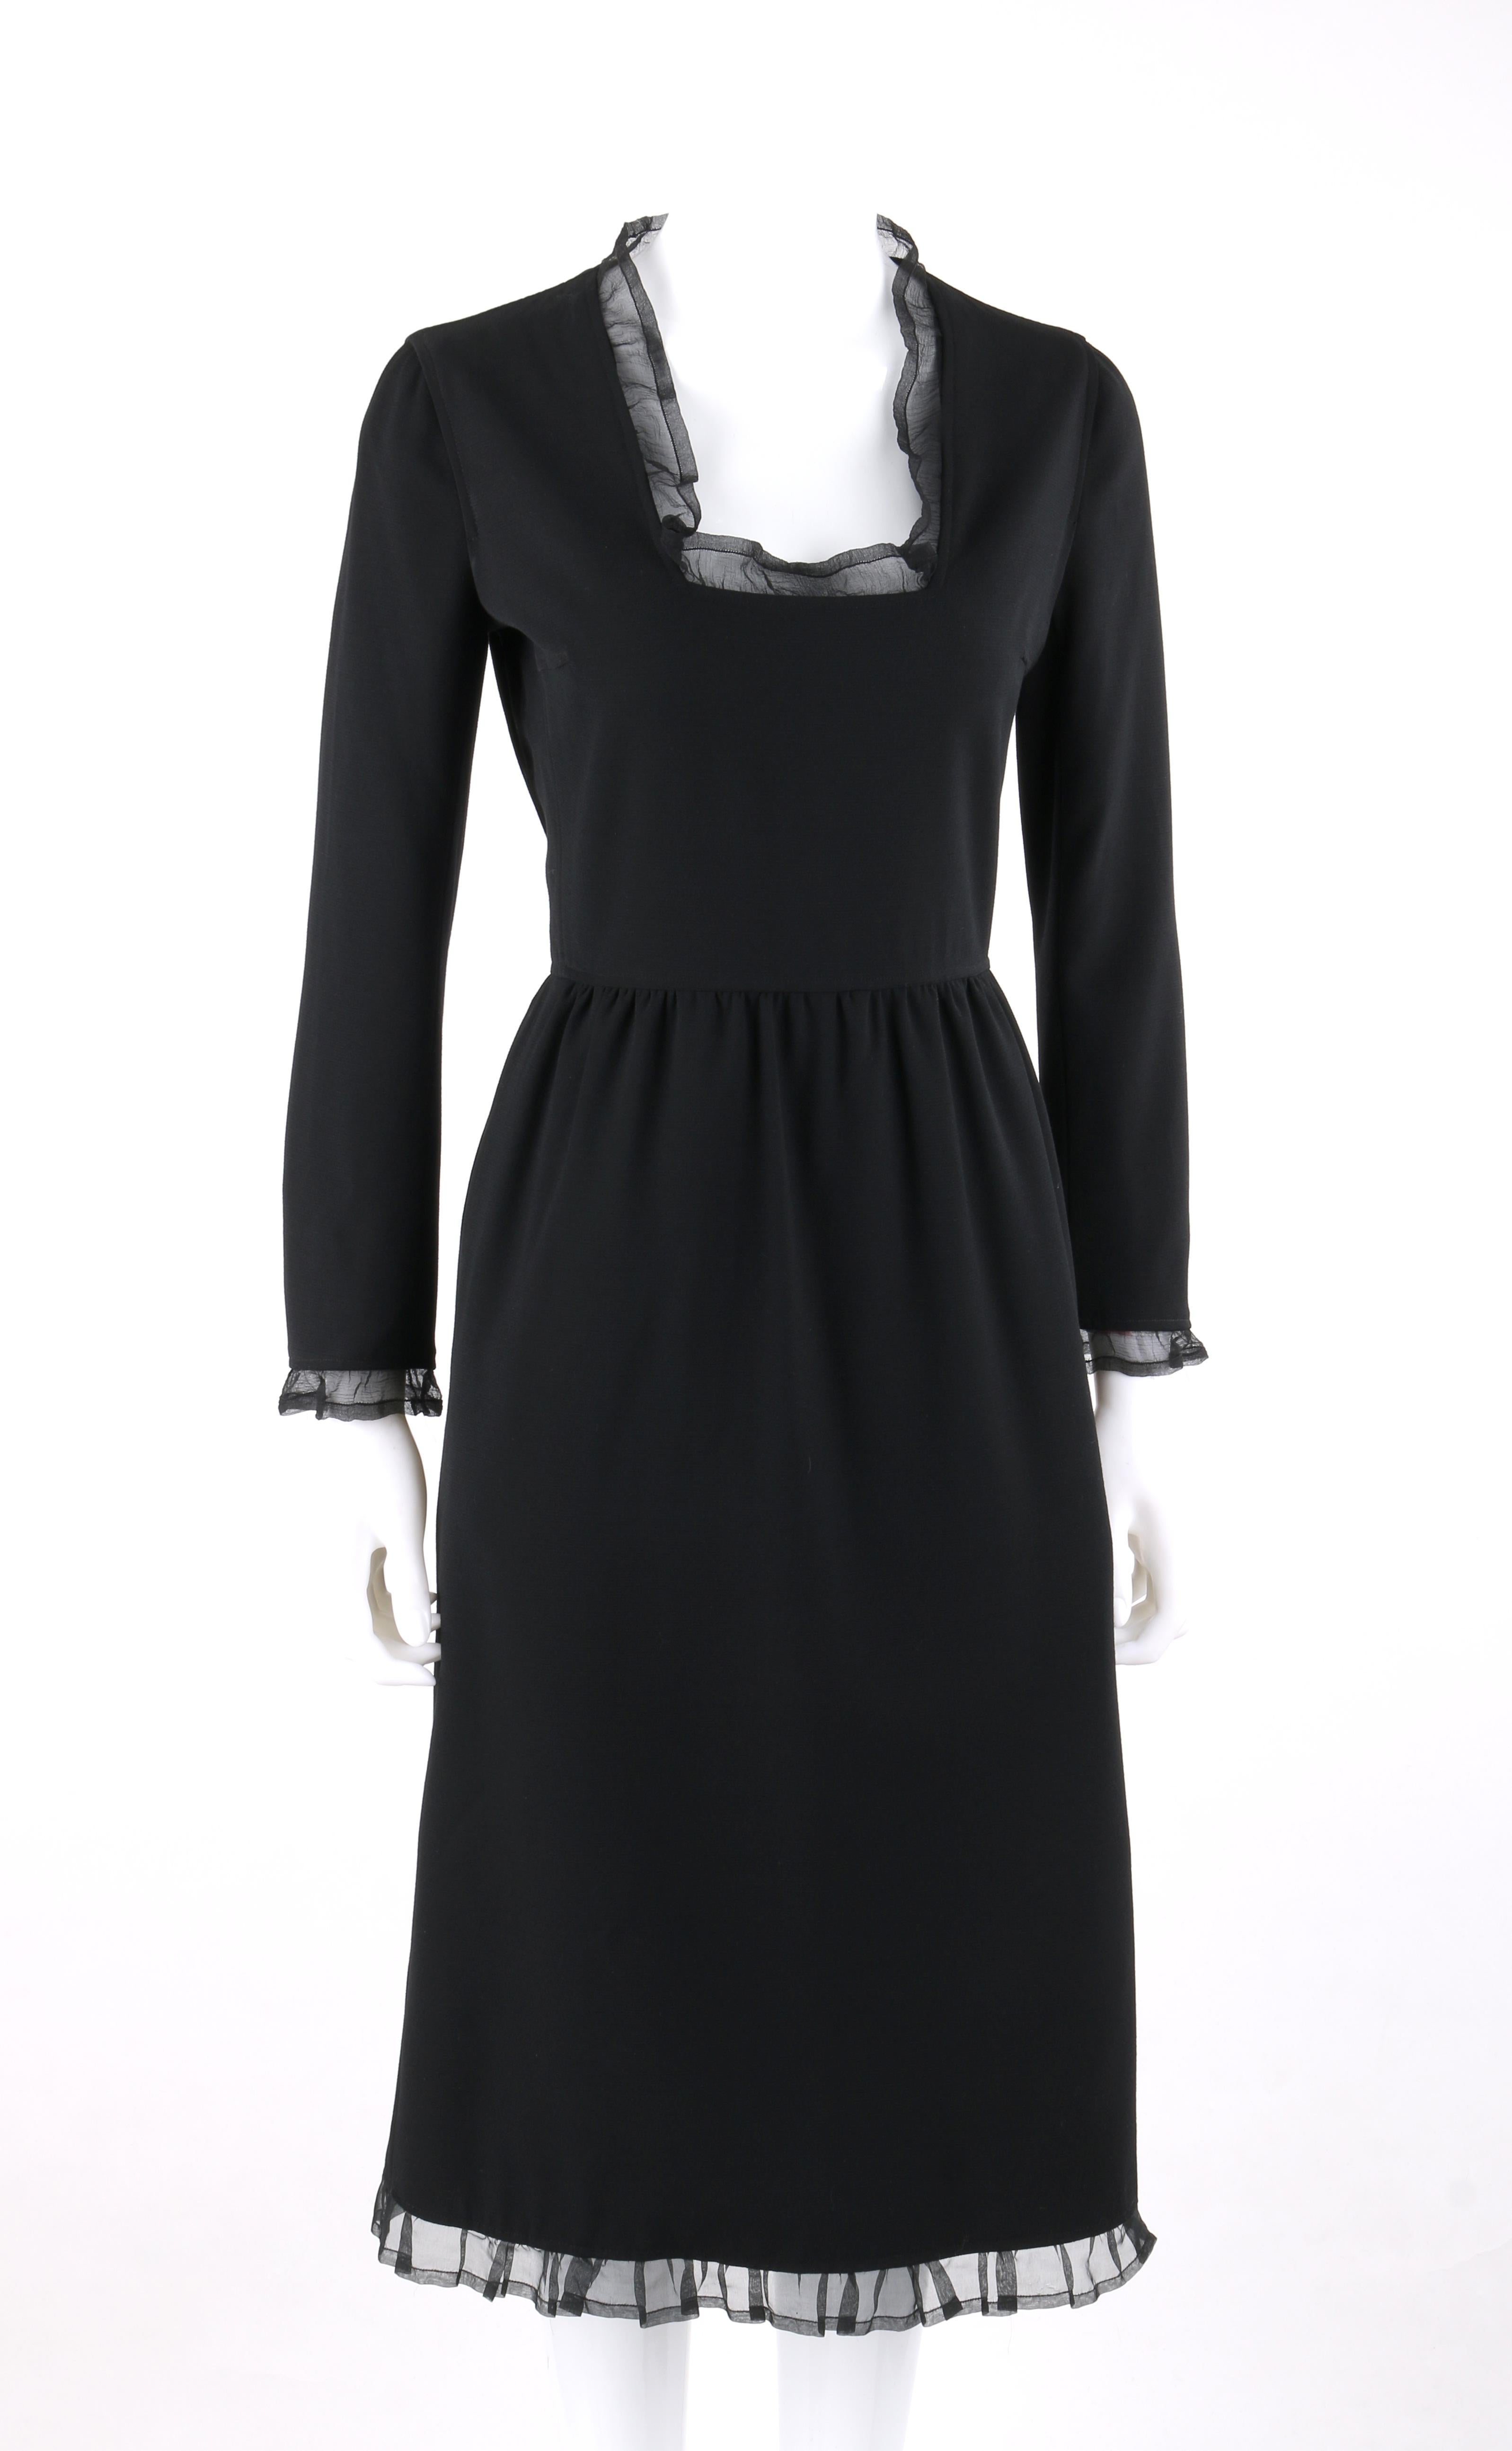 COURREGES c.1970's Black Silk Ruffle Square Scoop Neck Midi Dress
 
Circa: 1970’s-1980's
Label(s): Courreges Paris
Designer: Andre Courreges
Style: Midi dress
Color(s): Black (exterior, interior)
Lined: Yes
Marked Fabric Content: “100% wool